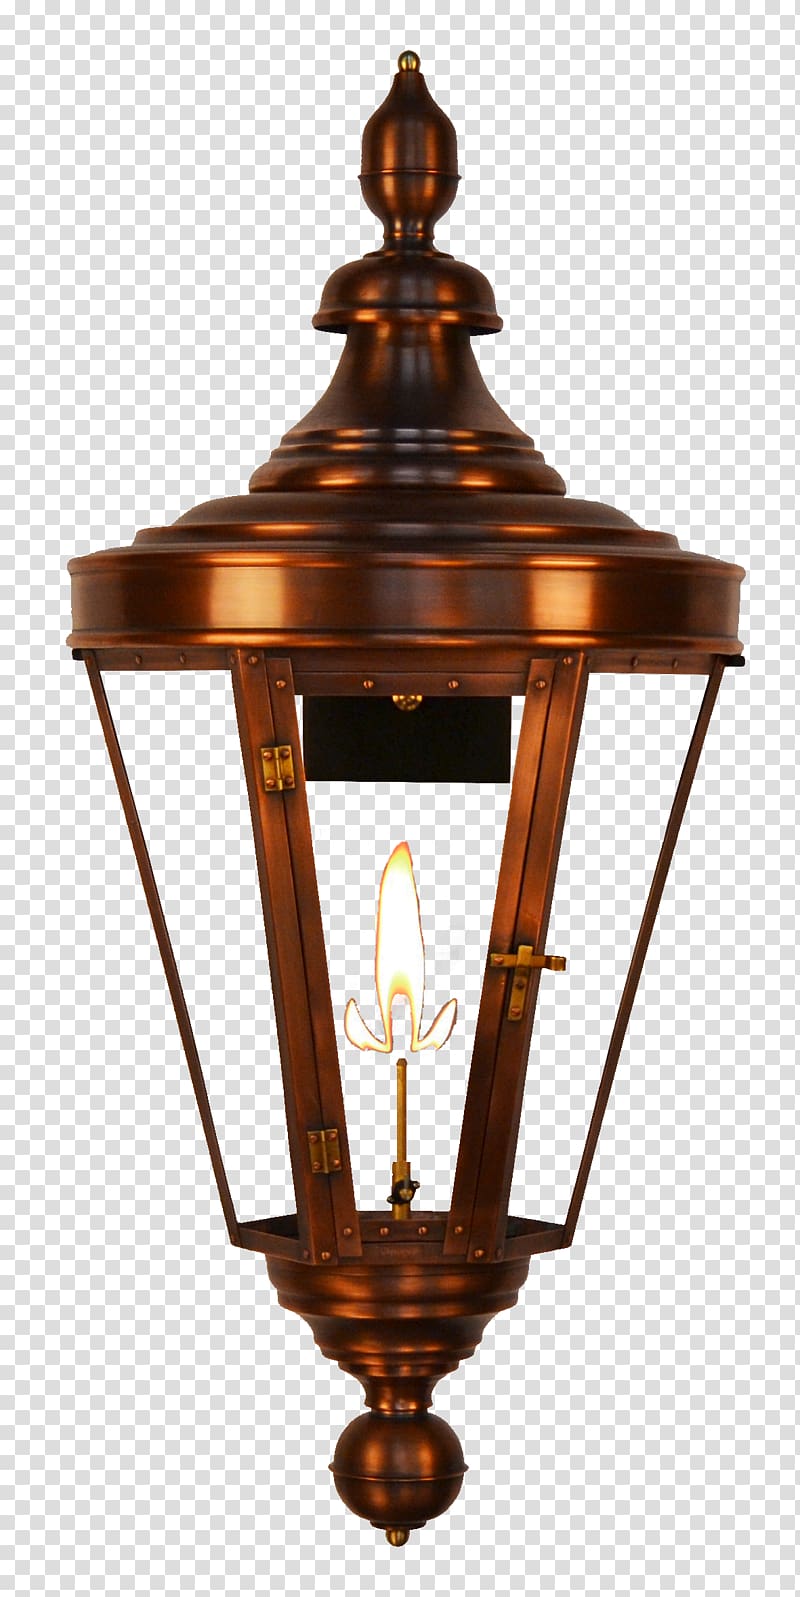 Royal Street, New Orleans Gas lighting Lantern, lantern transparent background PNG clipart